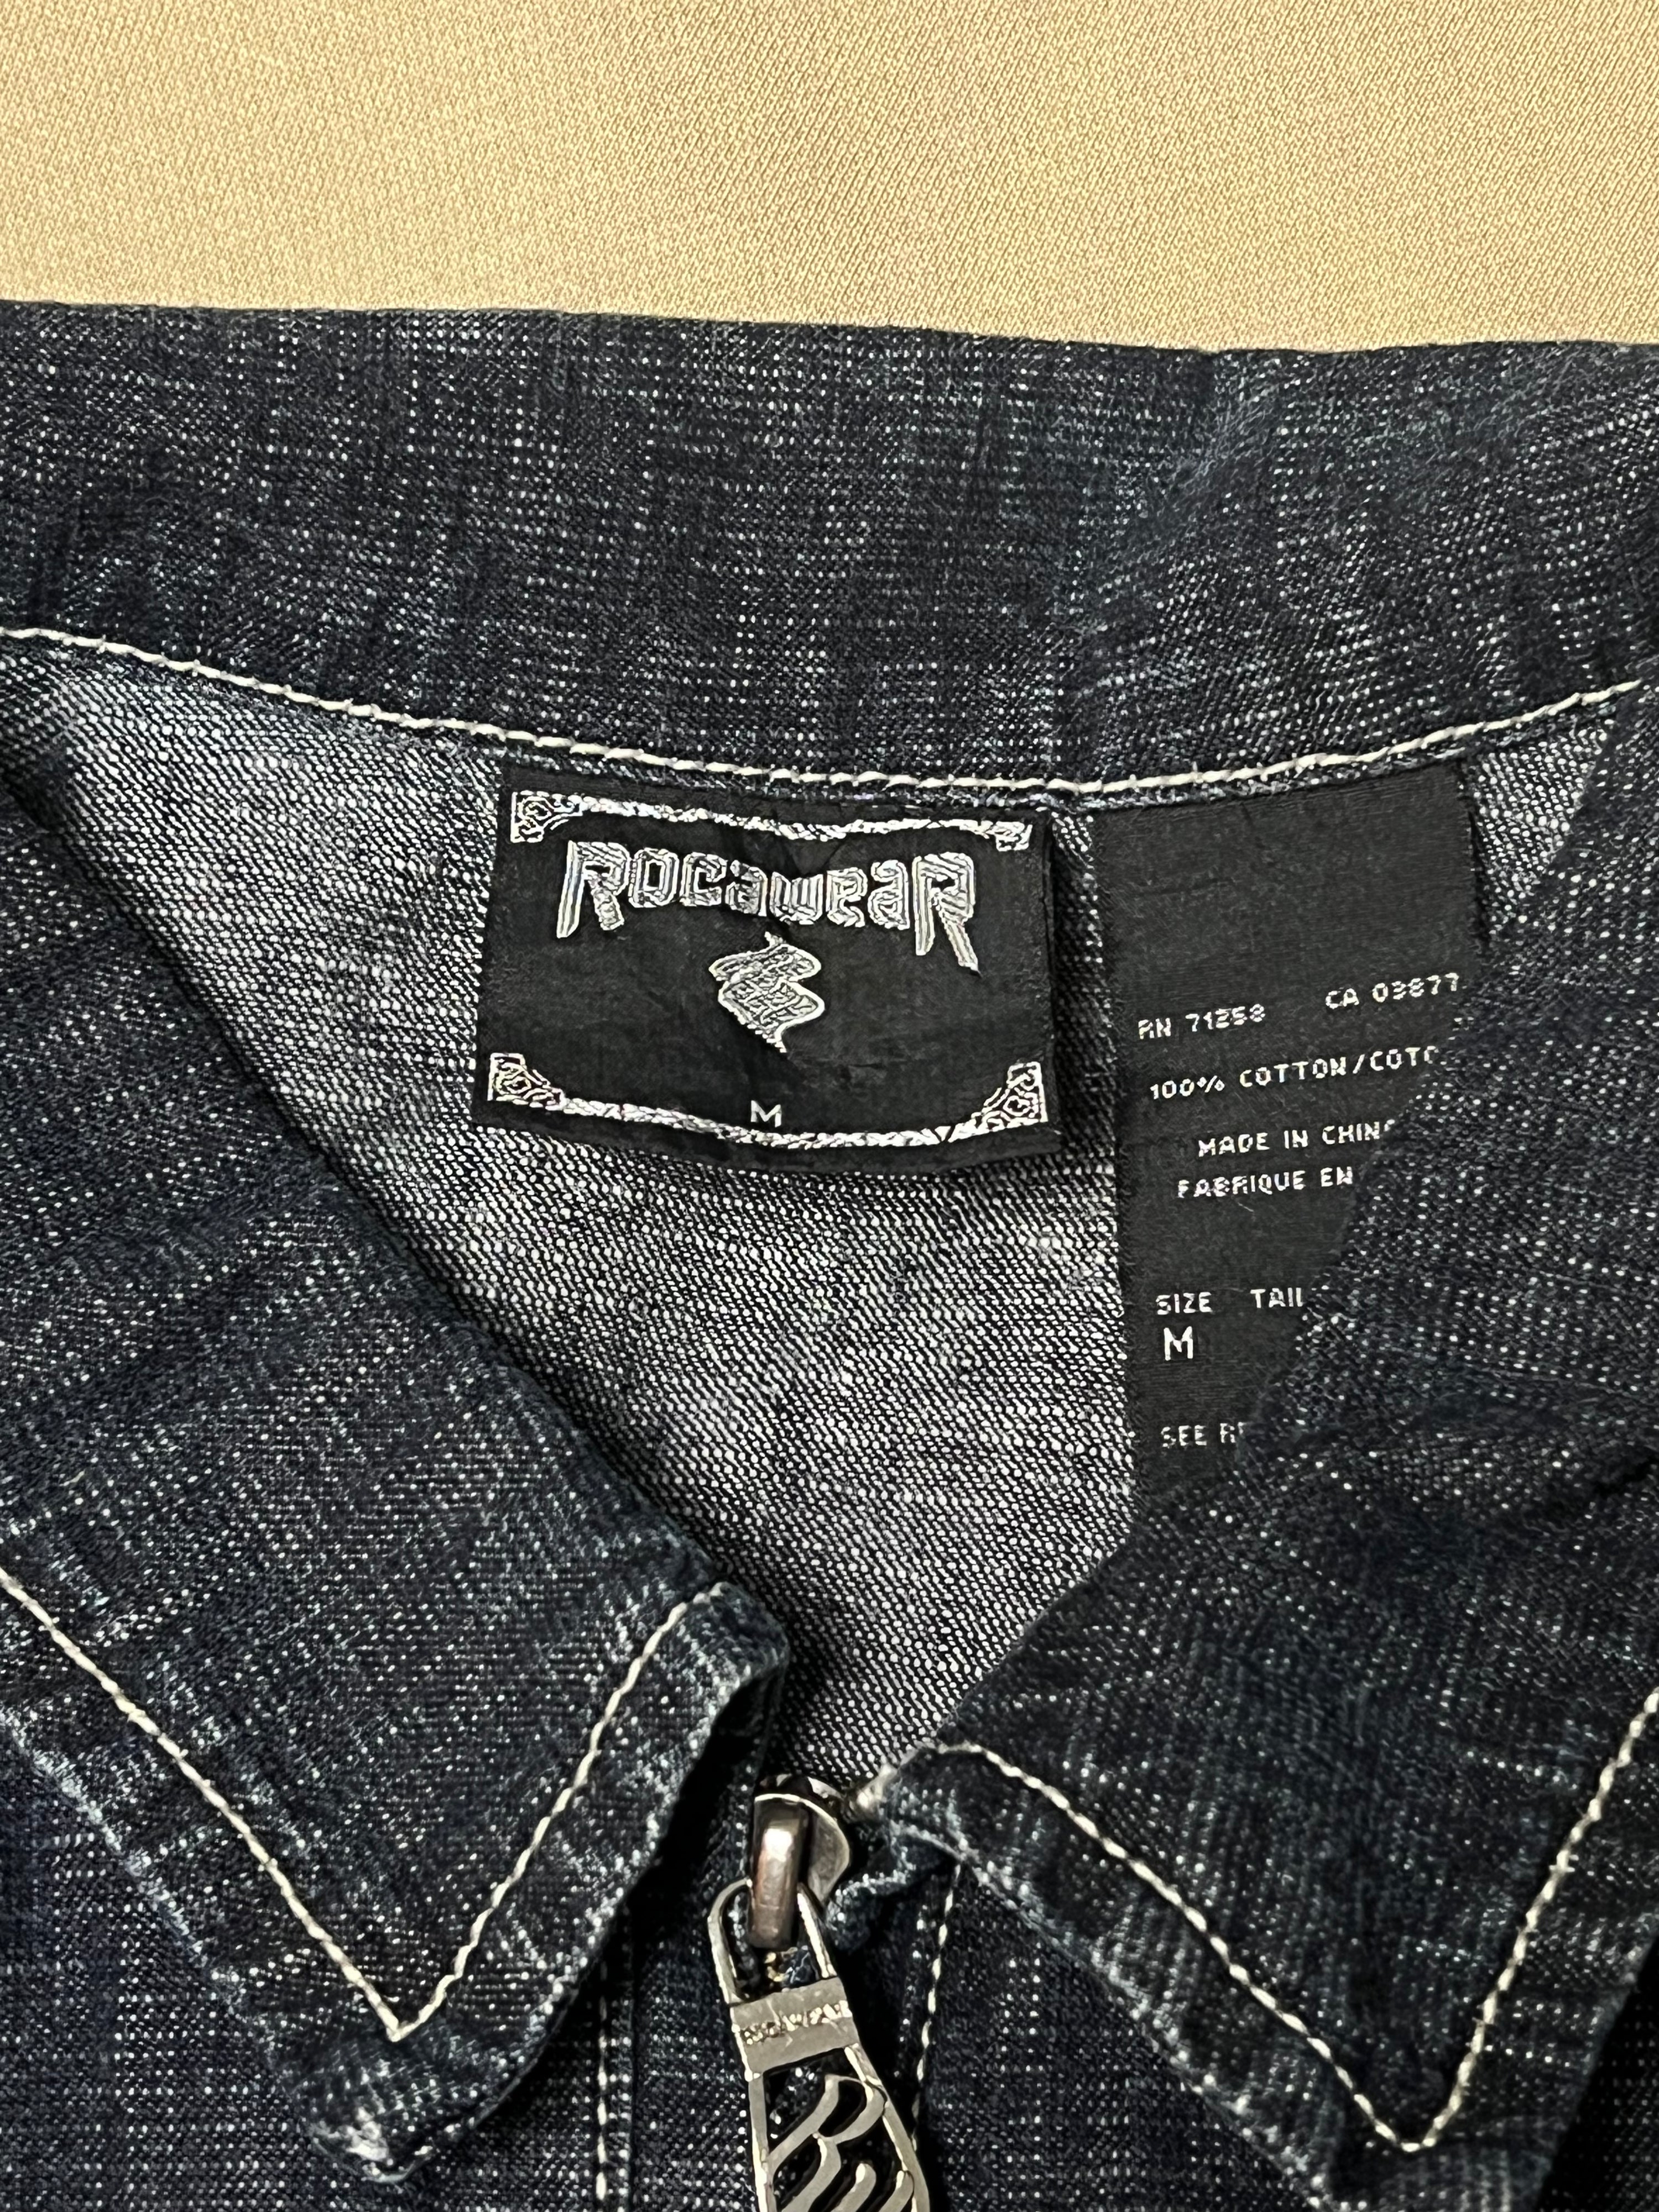 Vintage 90s Hip Hop Roca Wear Denim Jeans Harrington Jacket (XL)